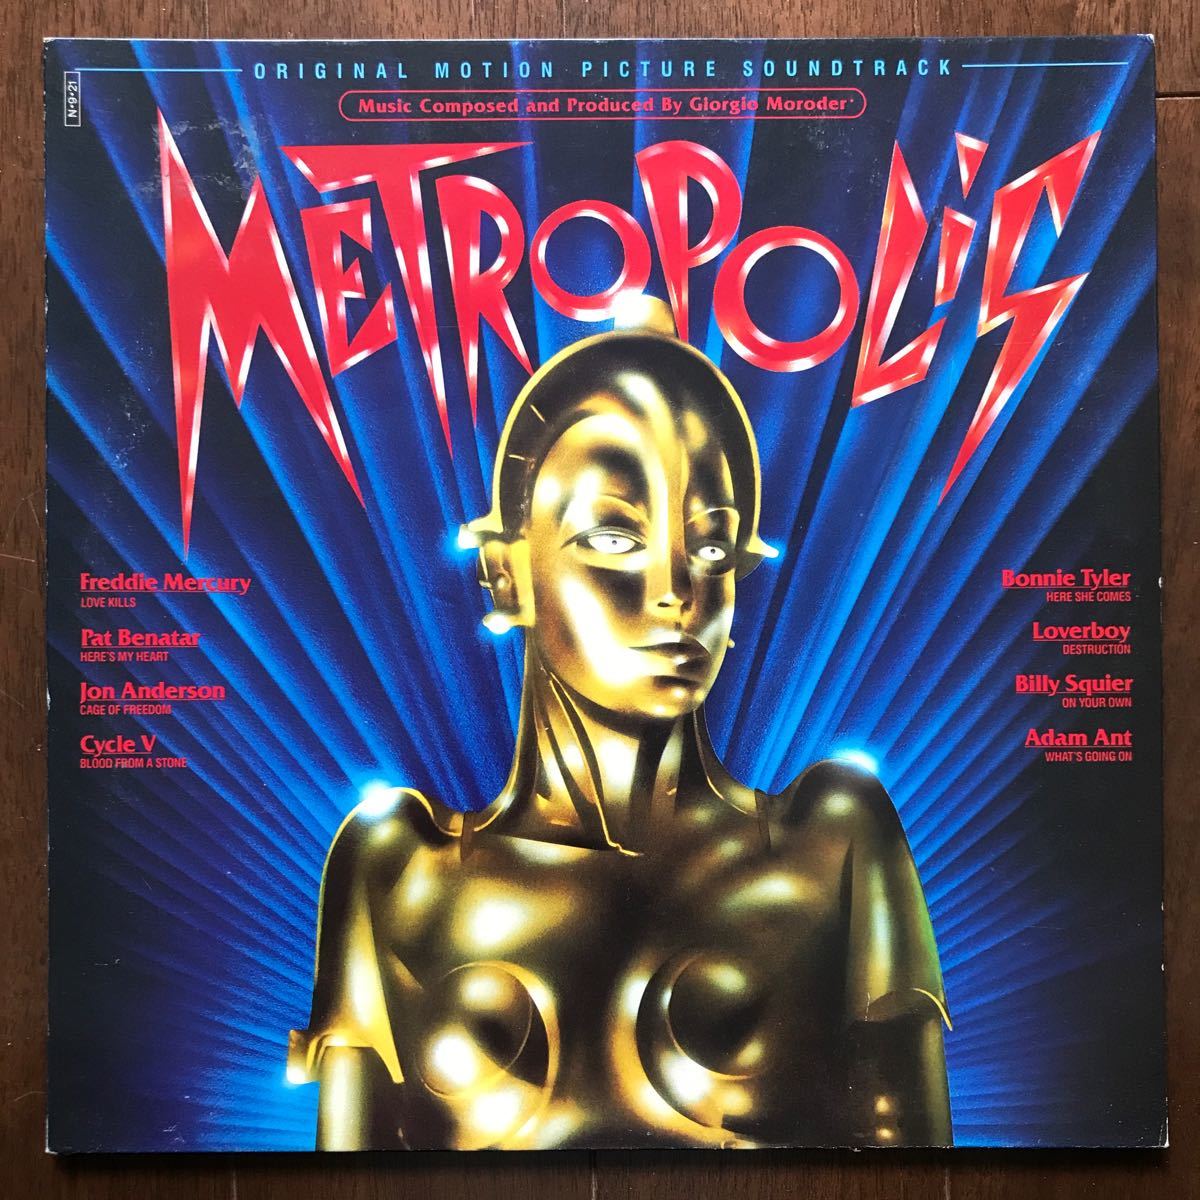 LP METROPOLICE OST 日本盤 メトロポリス FREDIE MERCURY/PAT BENATAR/GLORGIO MORODER/BONNIE TYLER/JON ANDERSON/LOVERBOY_画像1